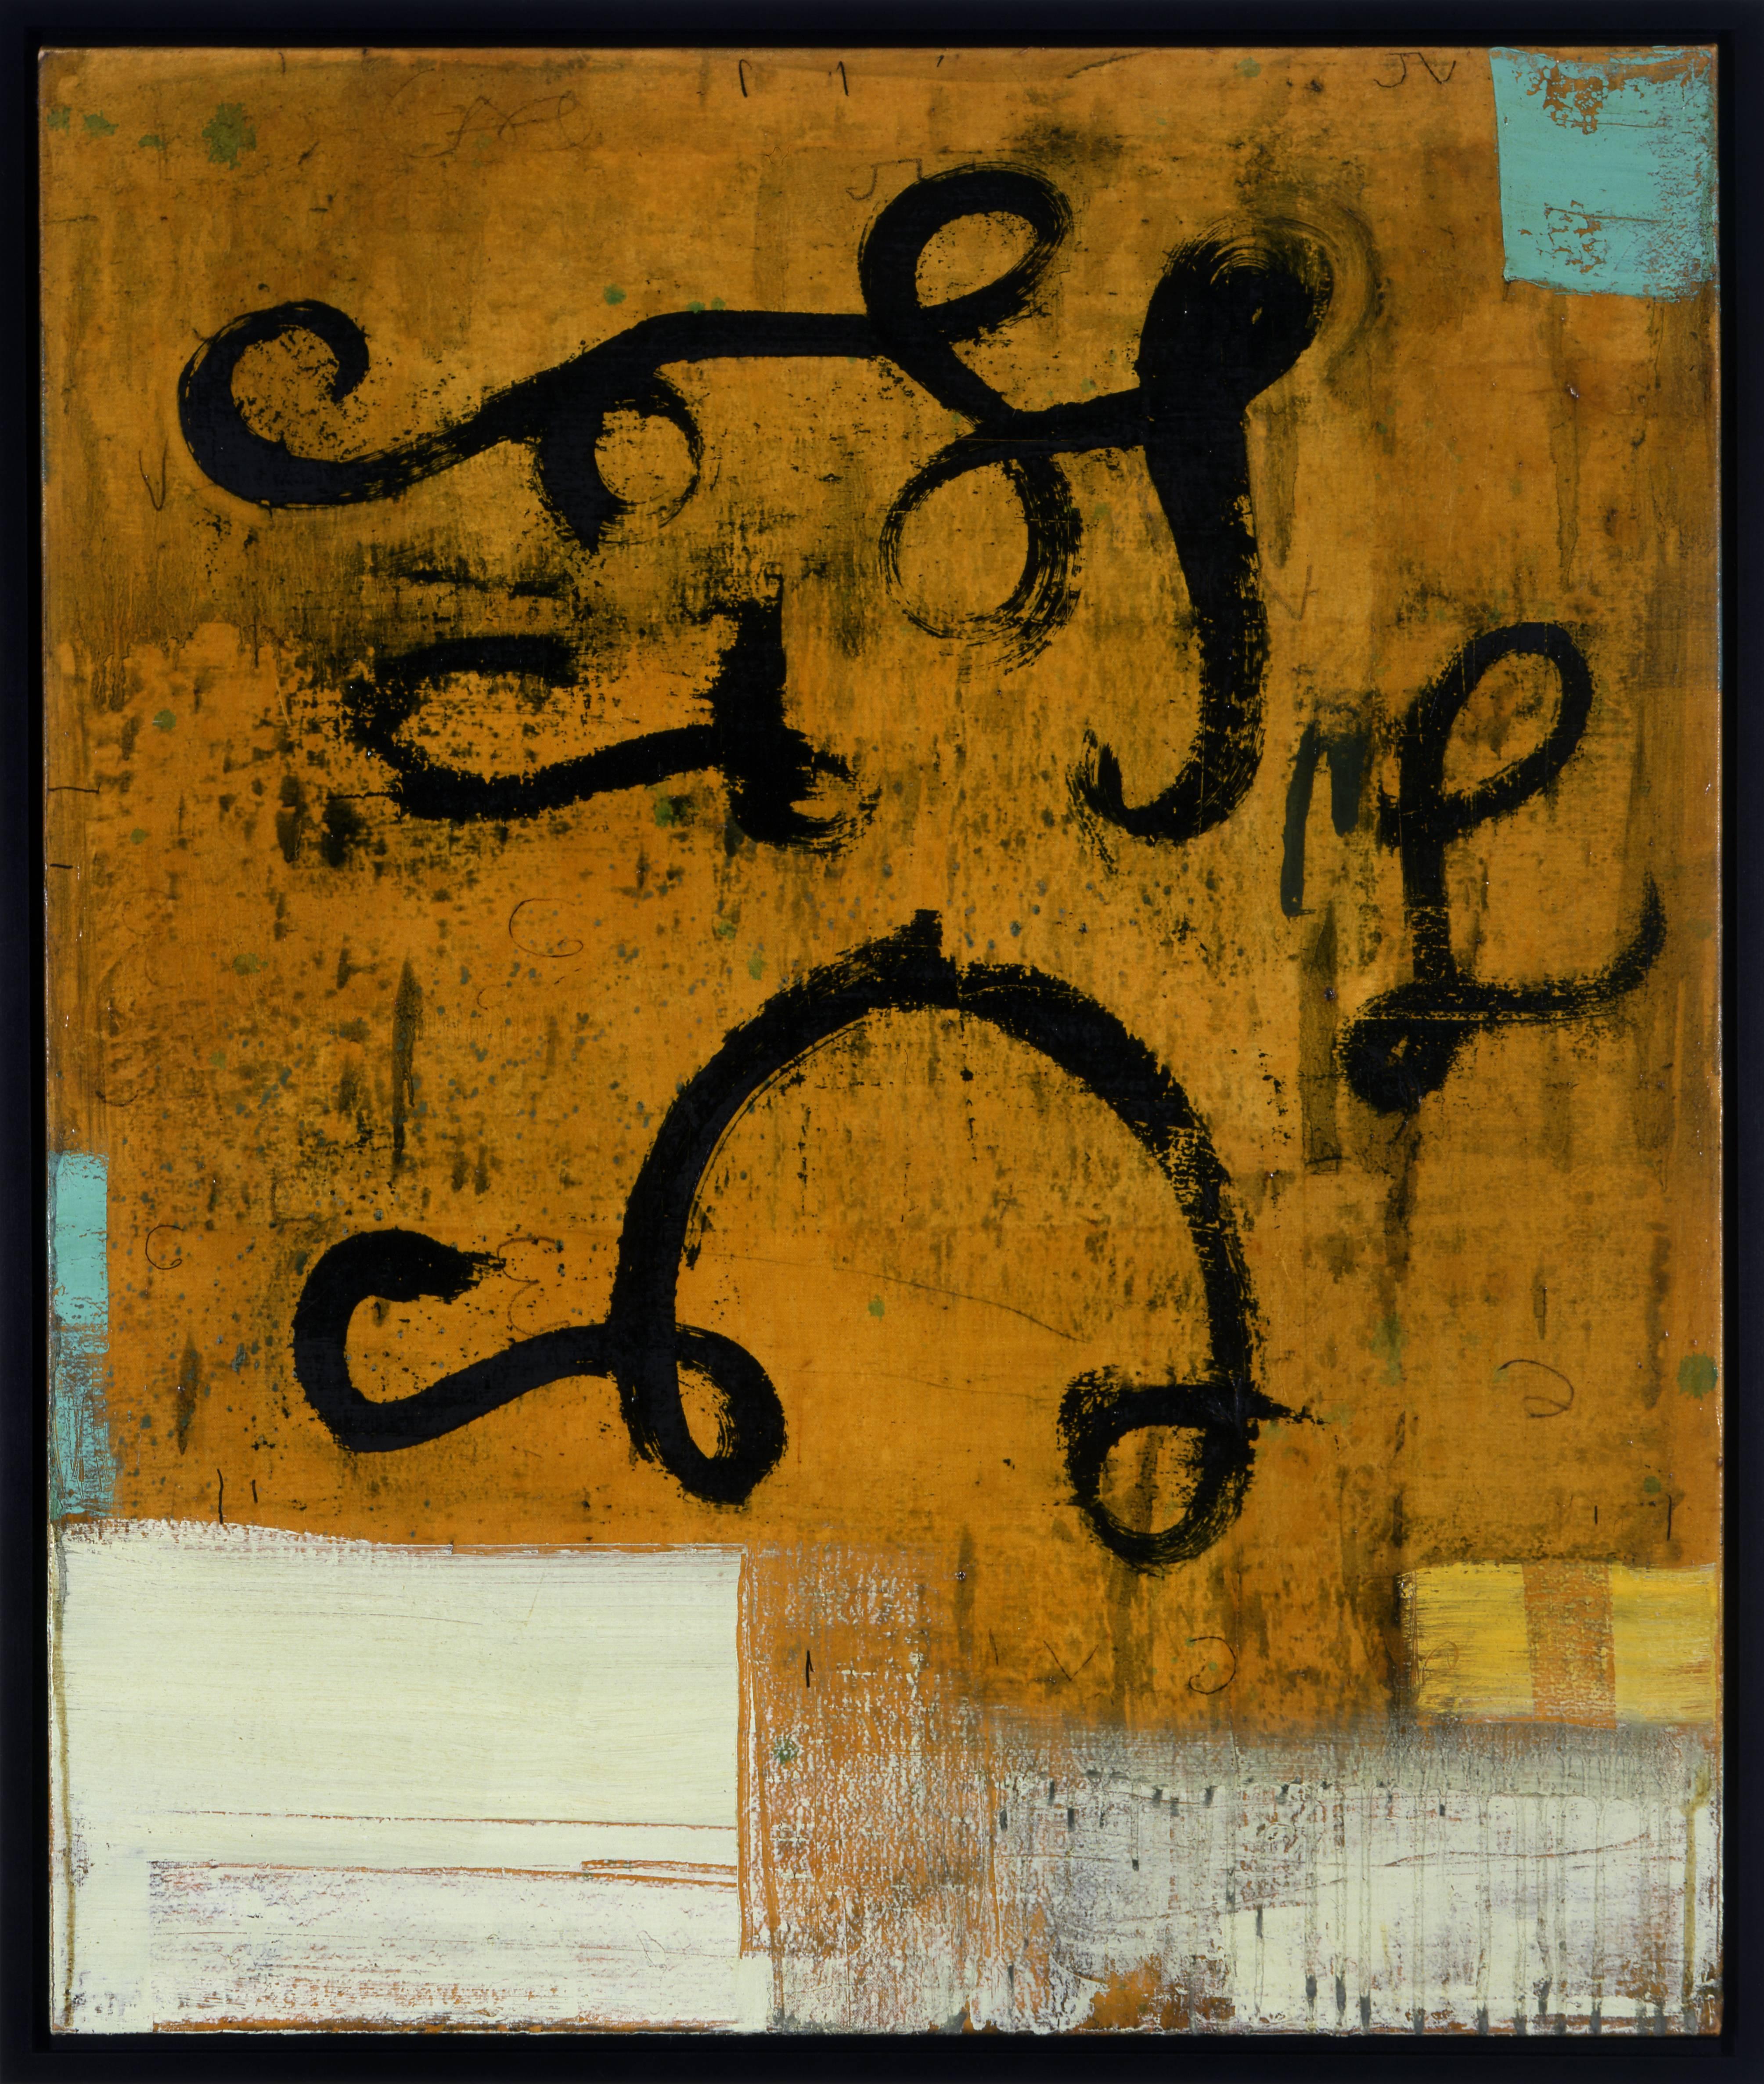 Robert Kelly Abstract Painting – Cairo Ledger III.